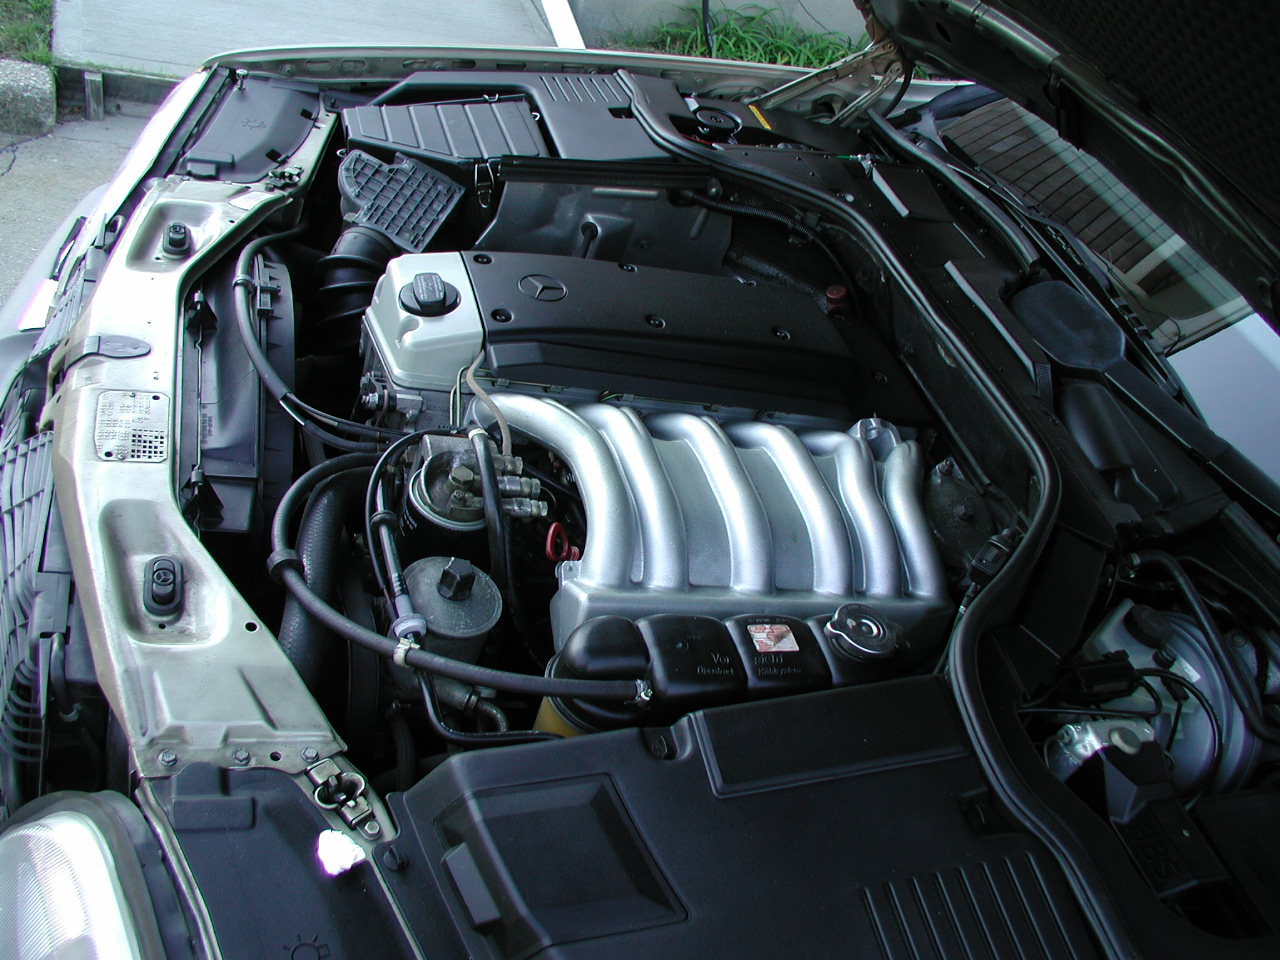 Технические характеристики и обслуживание 603 мотора мерседес